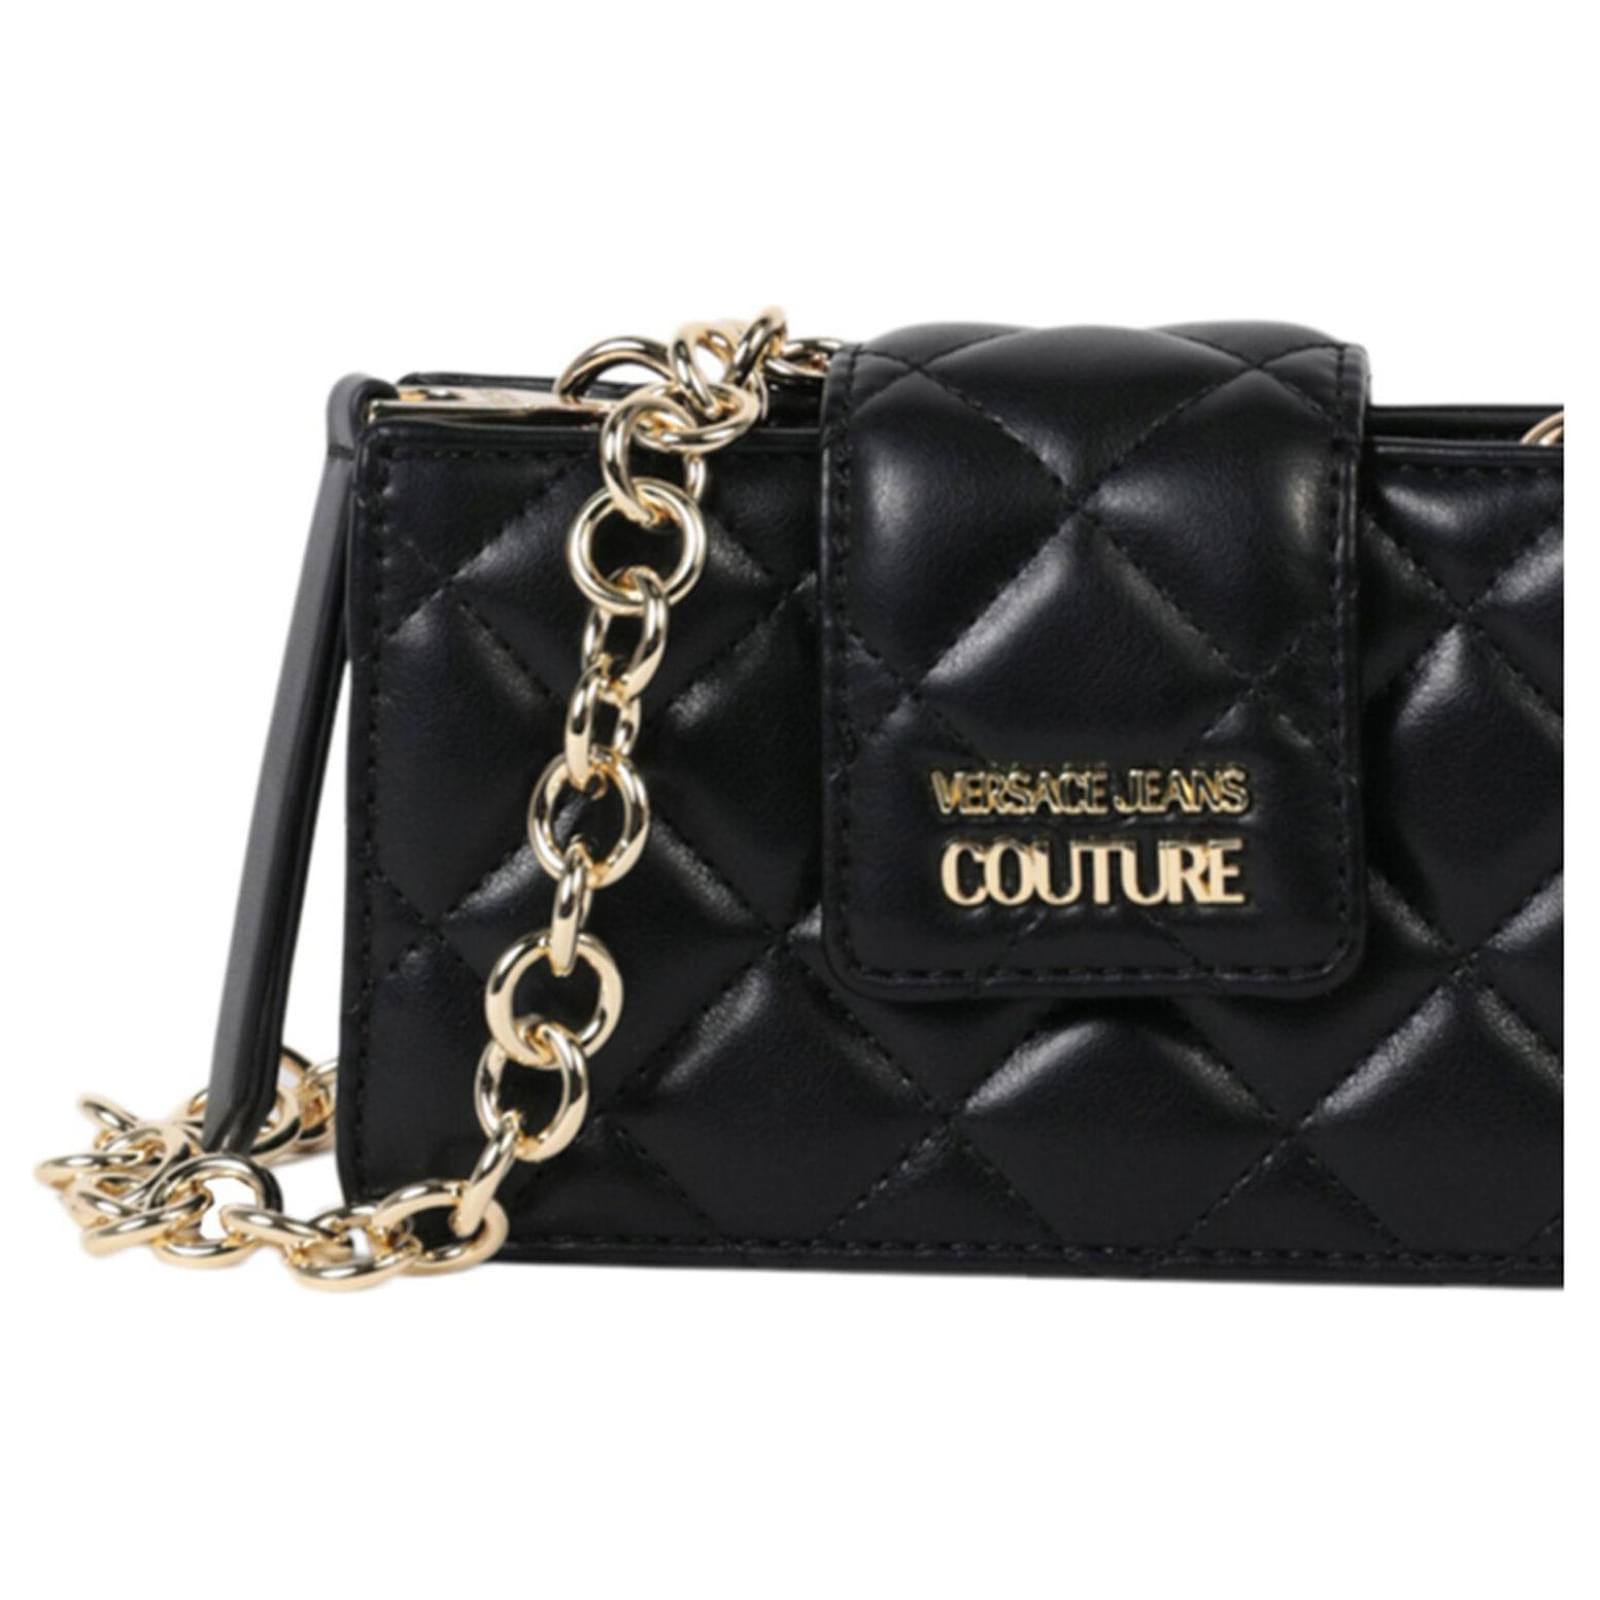 Buy Versace Jeans Couture Women Black Solid PU VJC Crossbody Bag